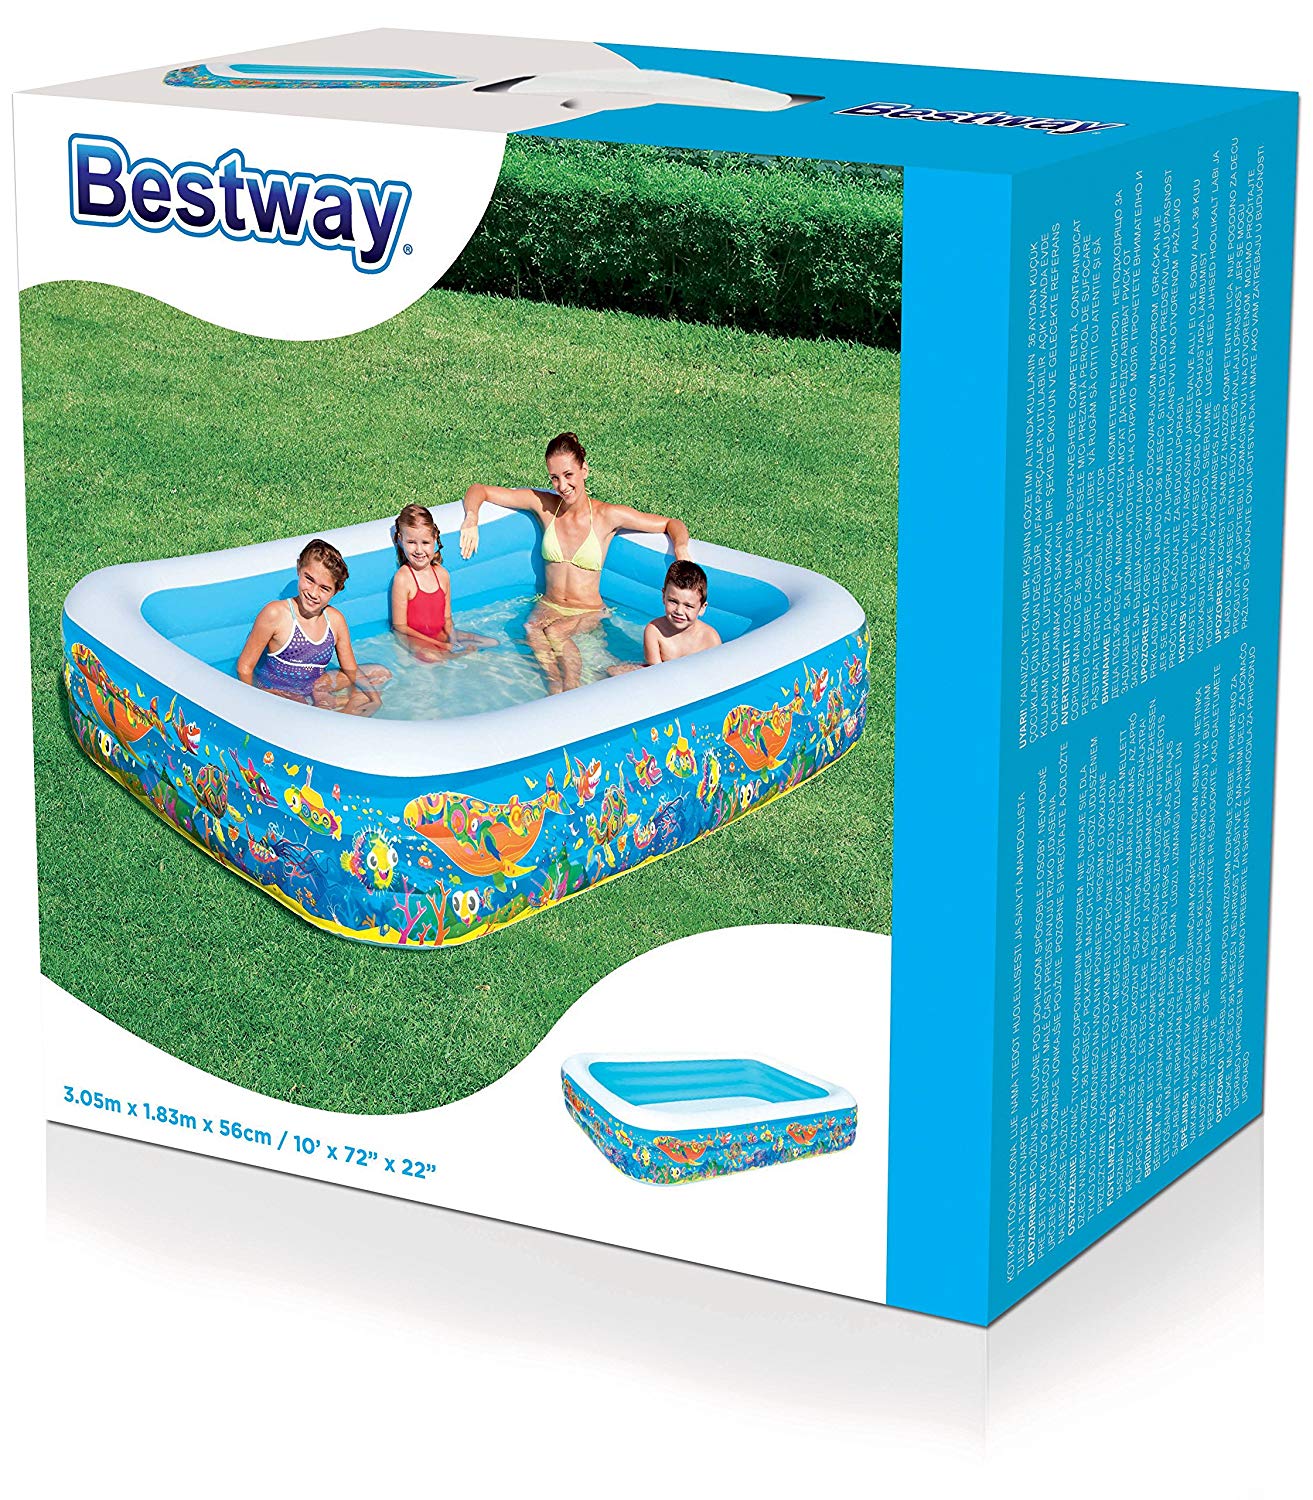 Bestway - Play Pool (10' x 72" x 22"/3.05m x 1.83m x 56cm)